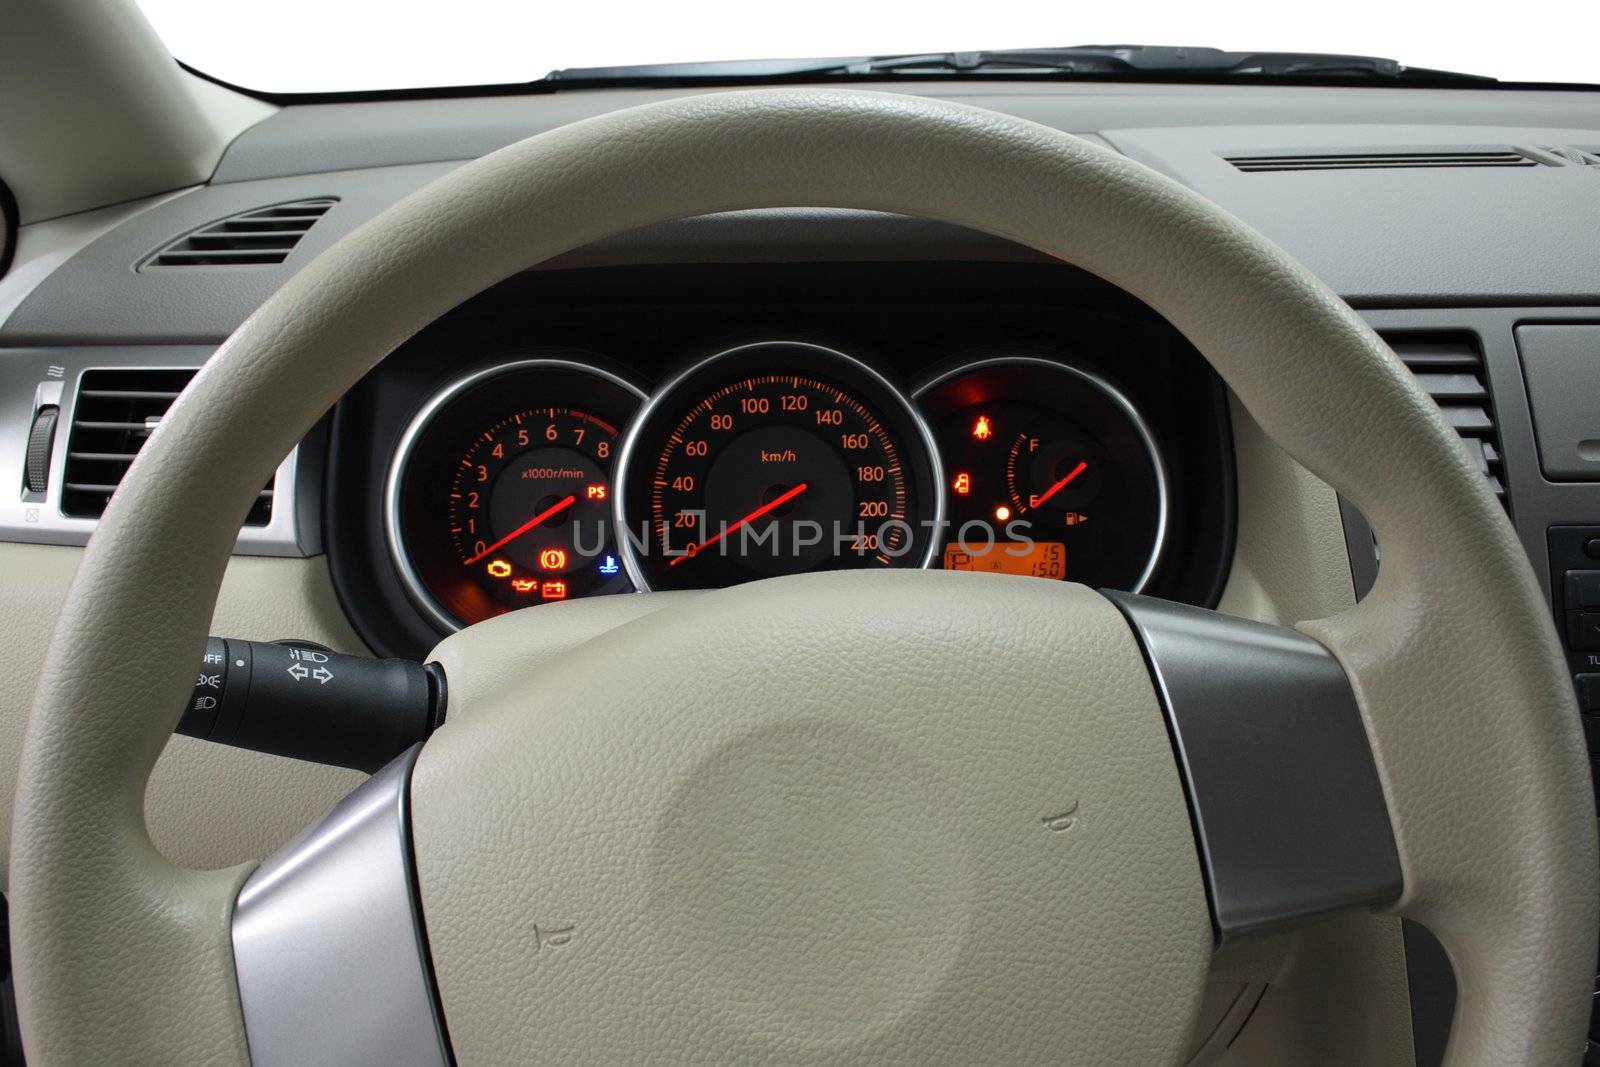 Steering wheel and dashboard by Gdolgikh